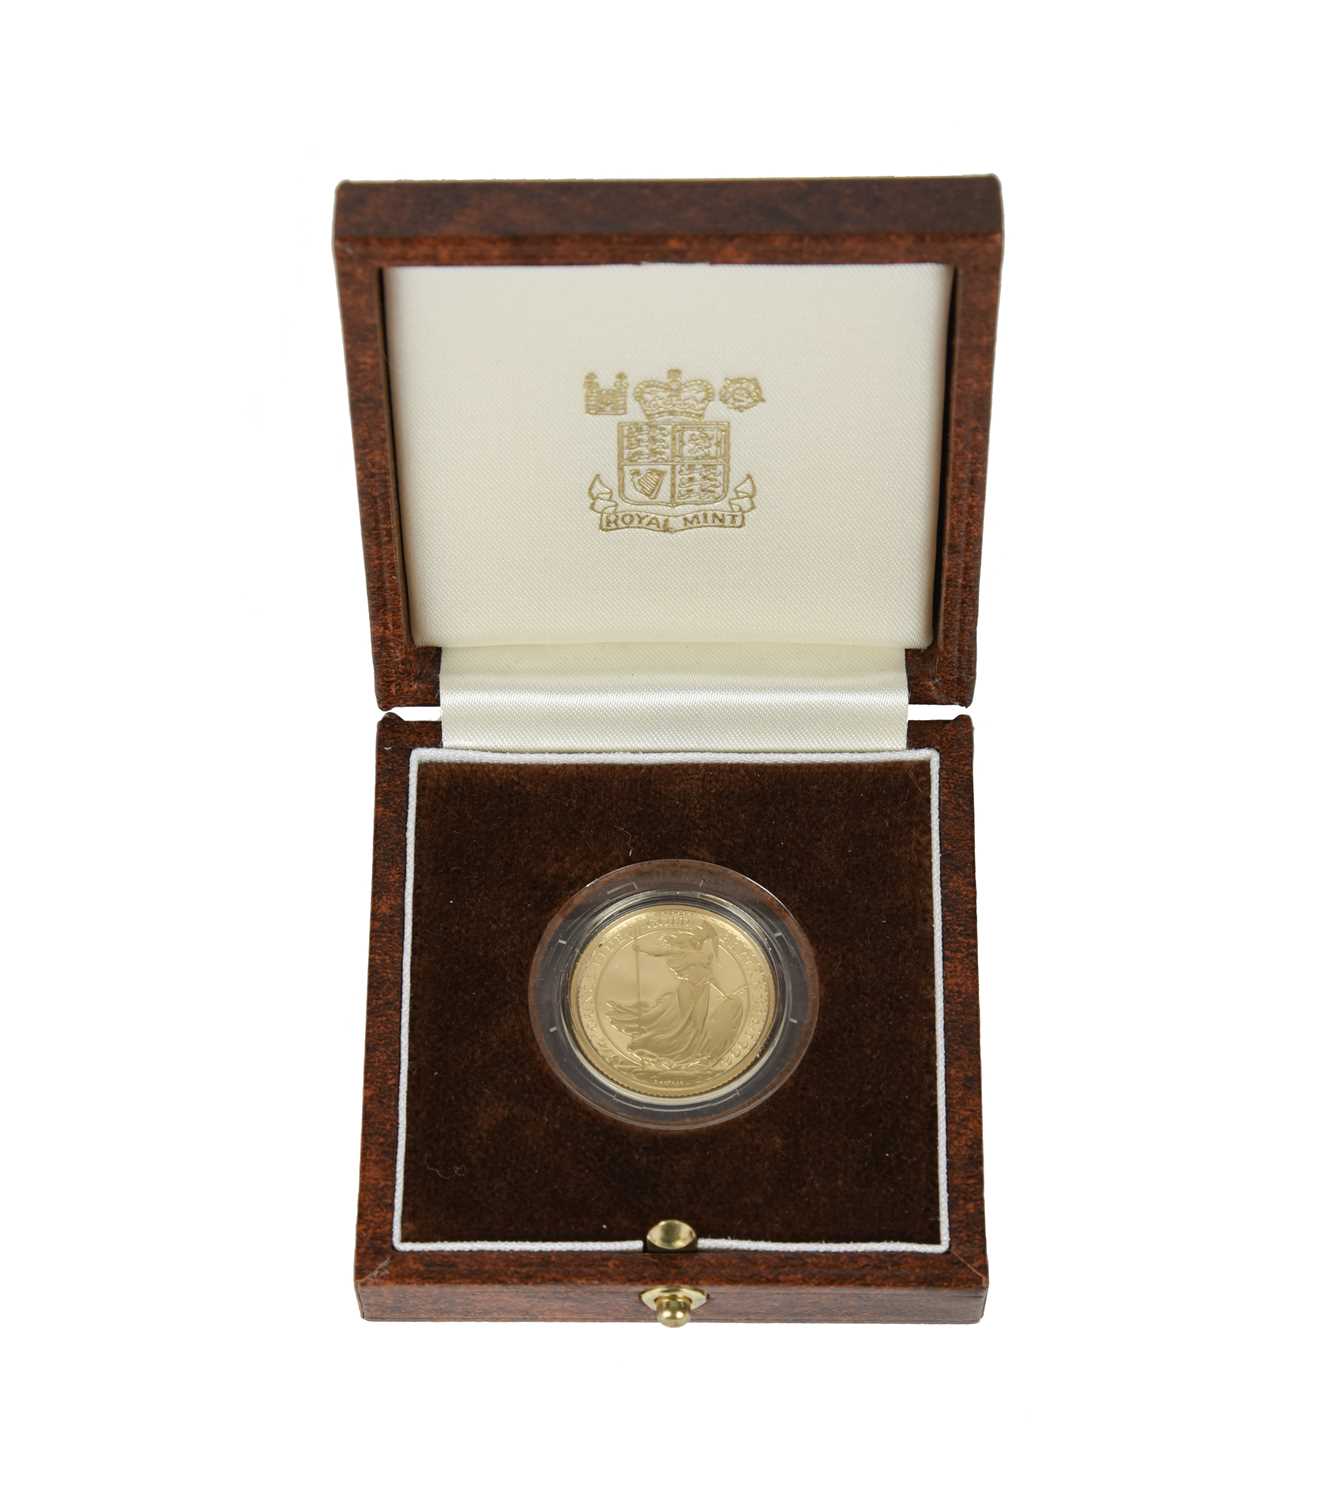 Elizabeth II, Britannia Gold Proof twenty-five pound coin, 1998 (S 4470), cased with certificate.